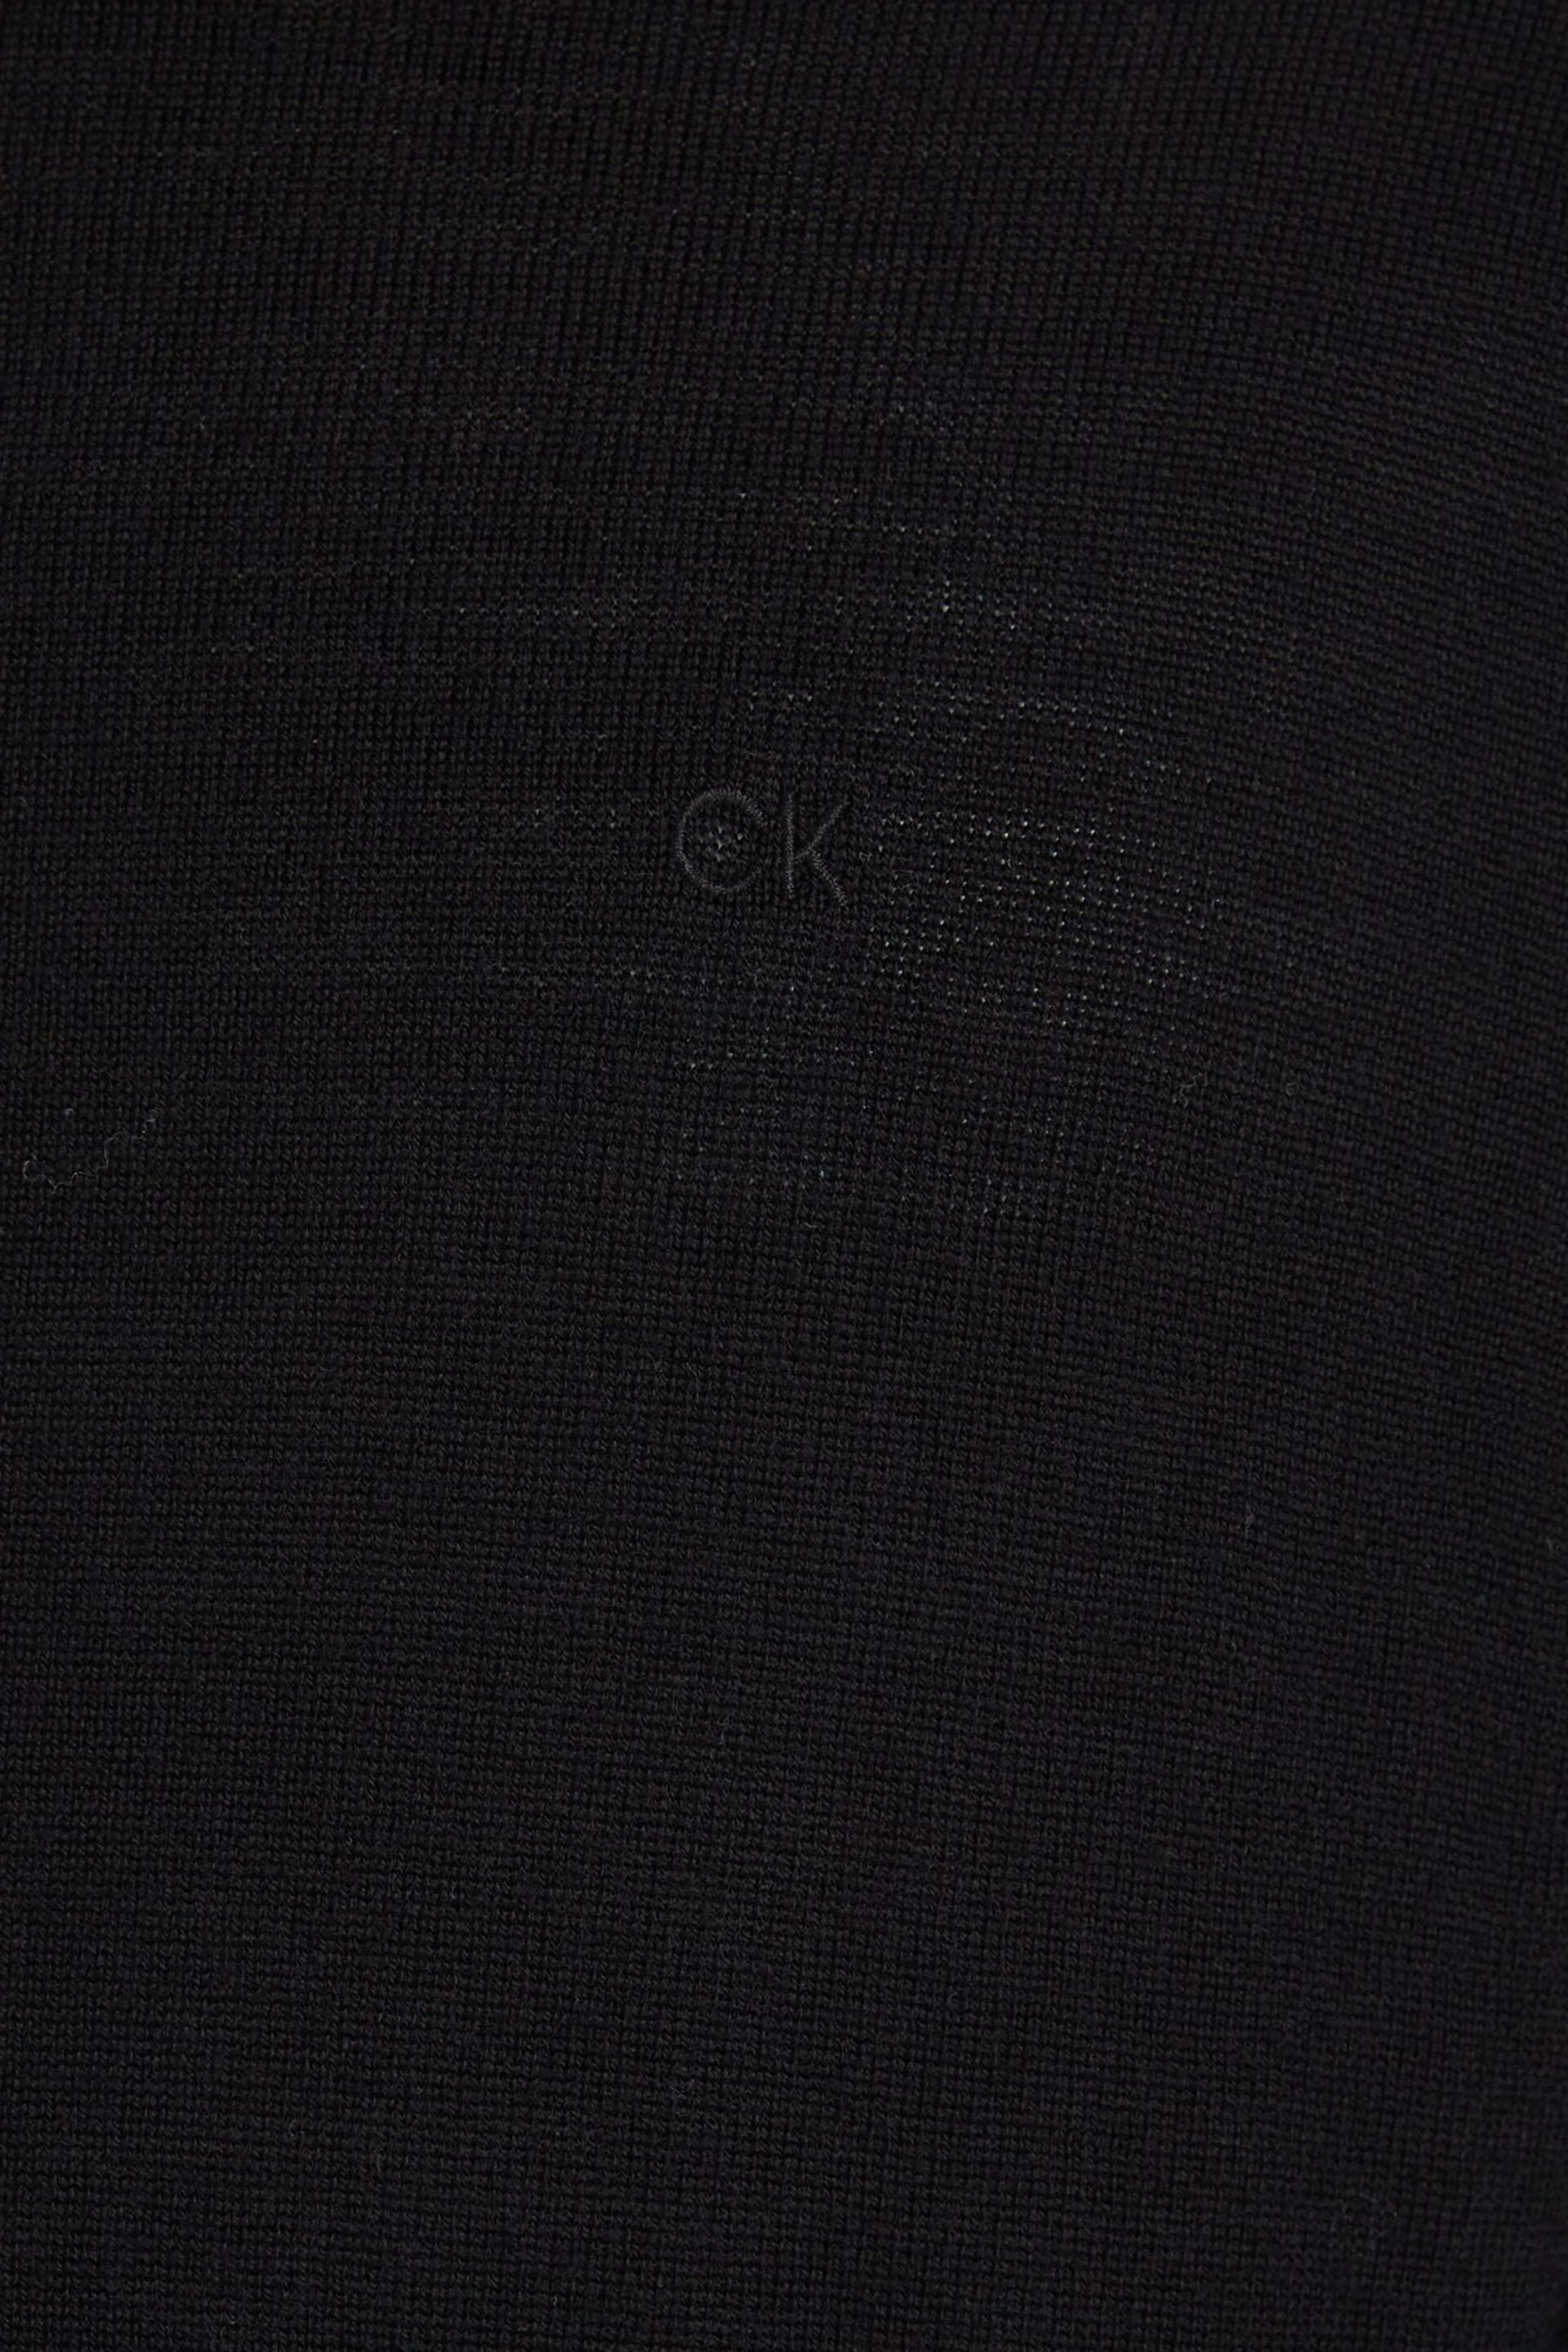 Calvin Klein Black Merino Turtle Neck Sweater - Image 3 of 3